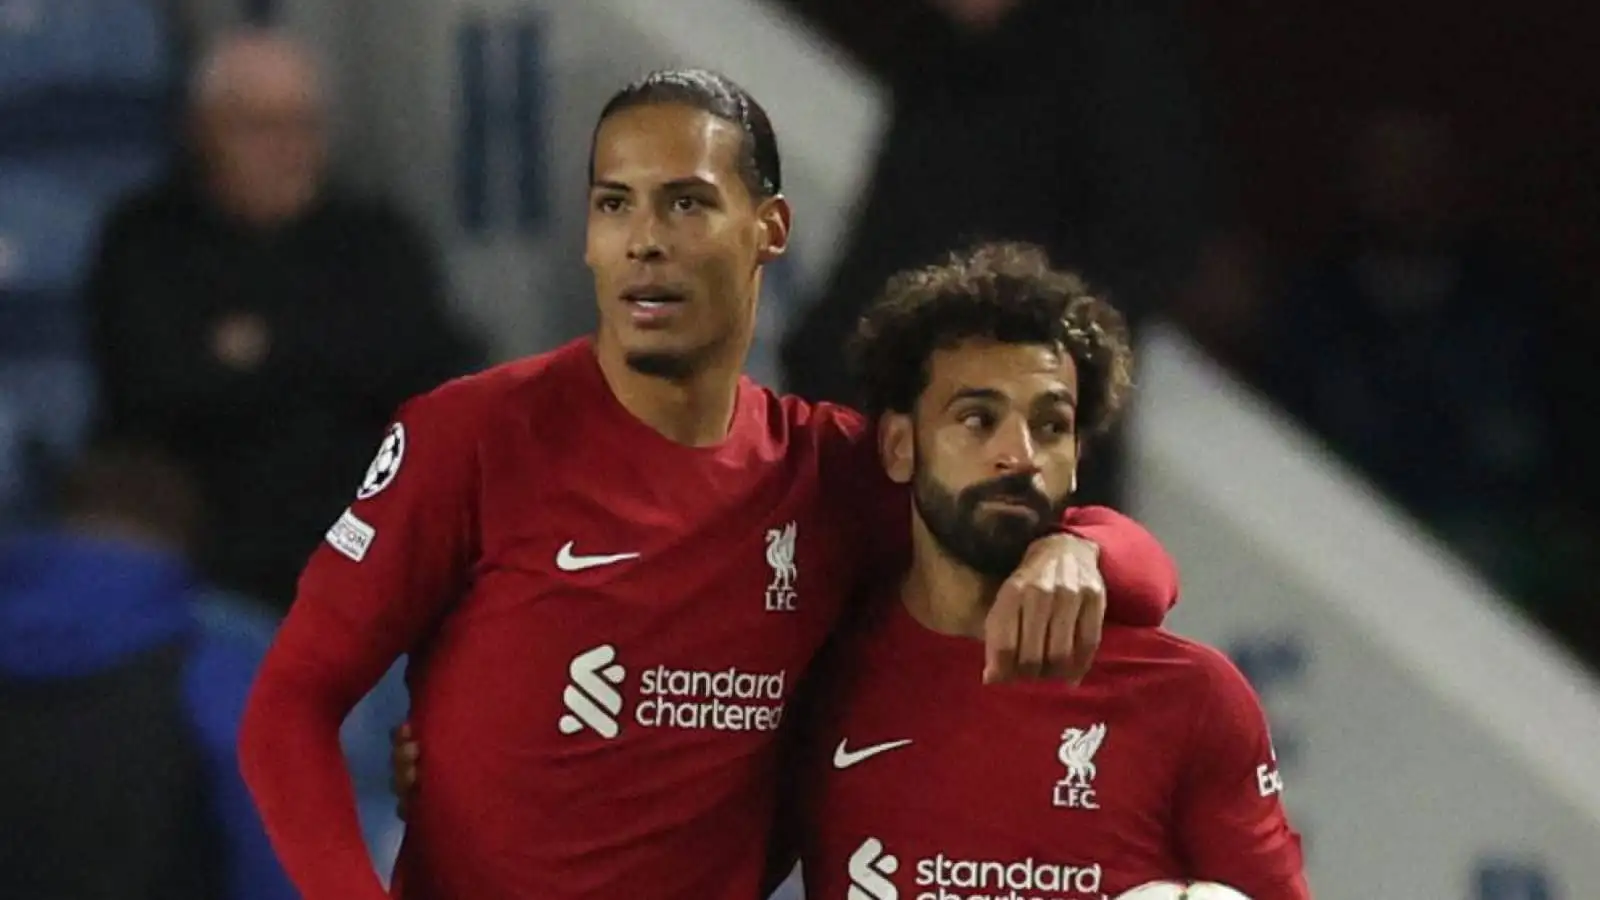 Liverpool stars Virgil van Dijk and Mohamed Salah